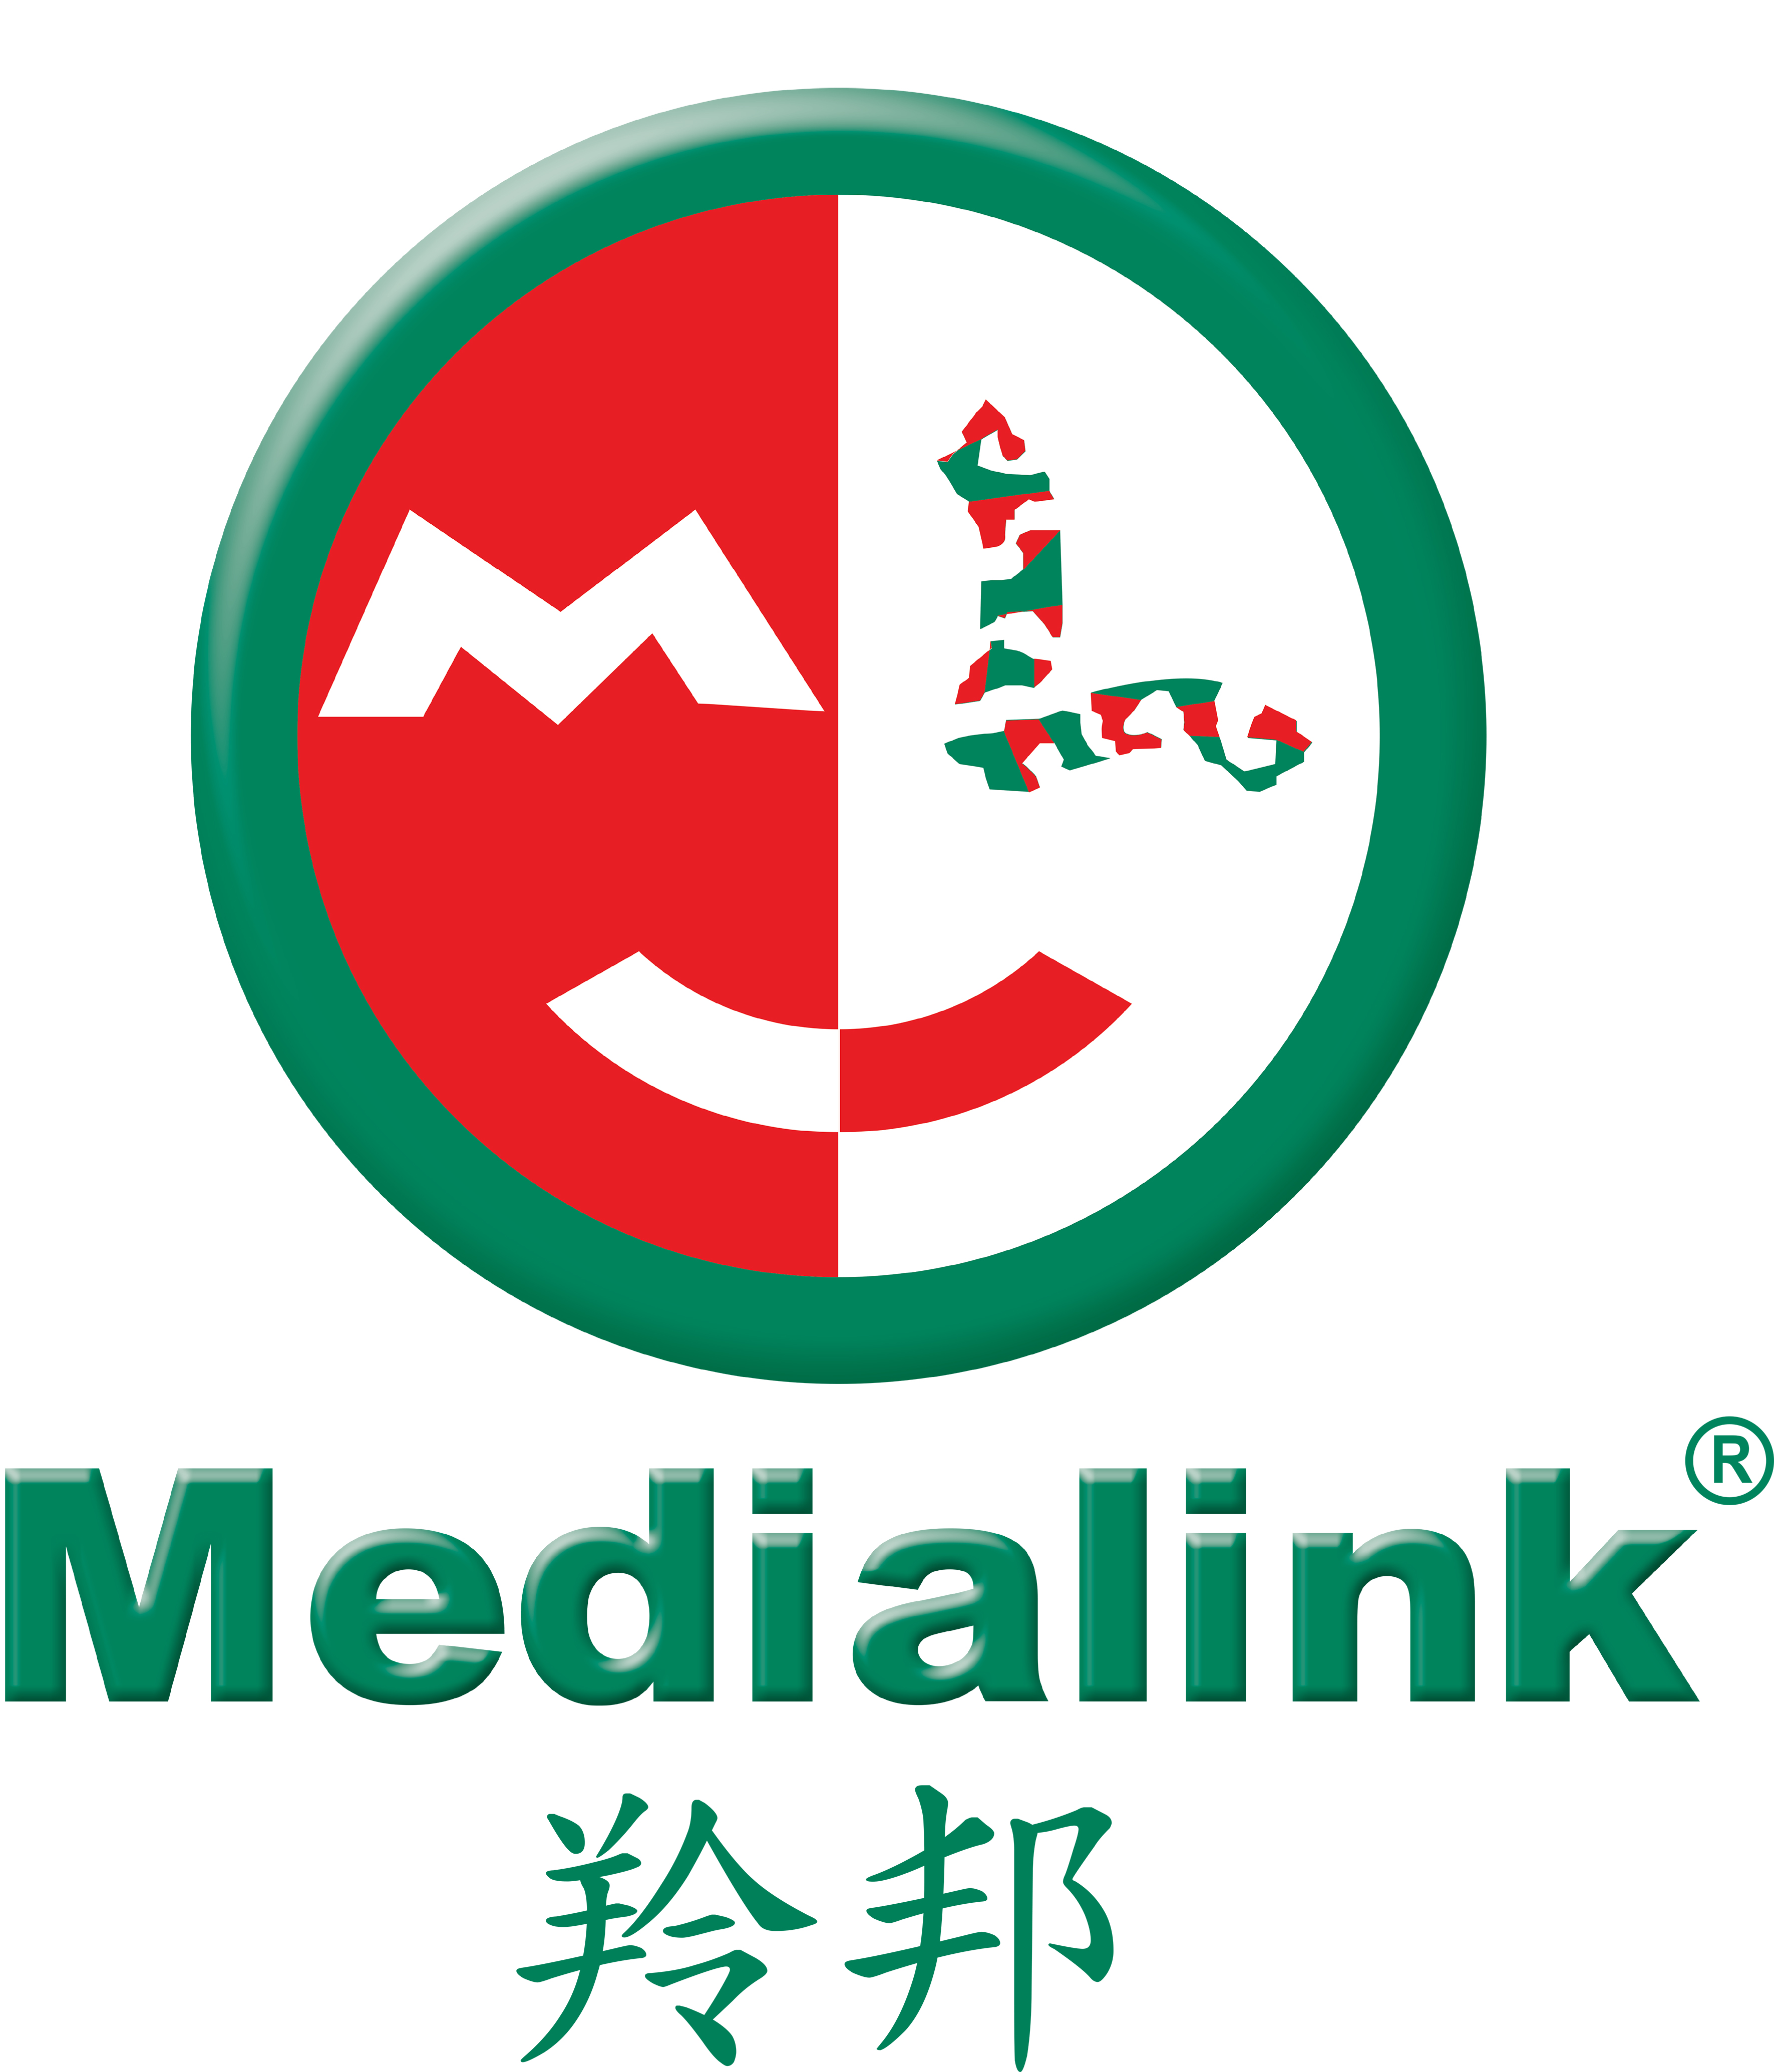 Medialink Group Limited